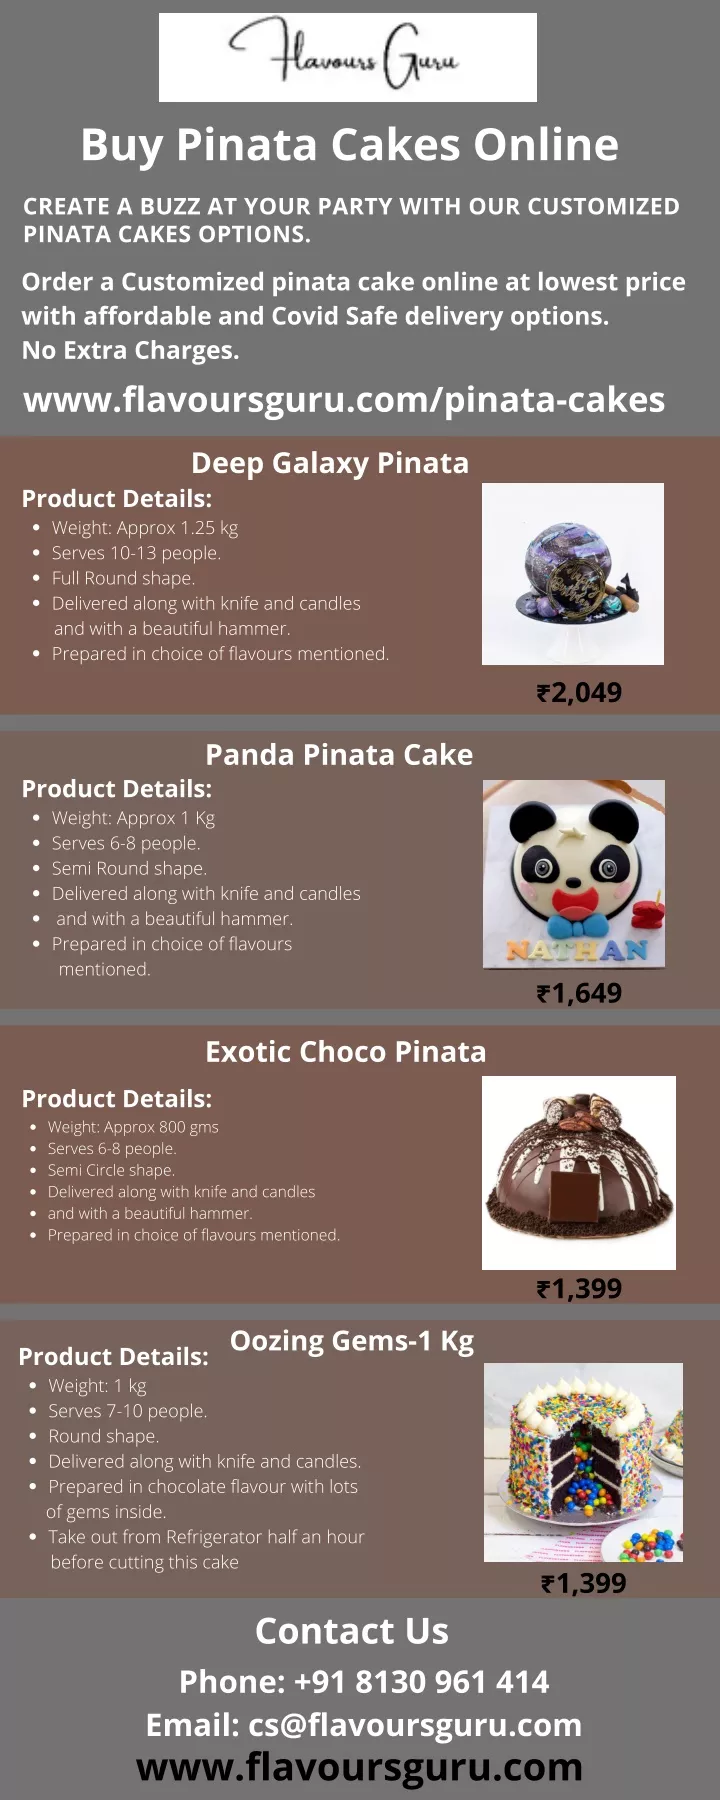 buy pinata cakes online